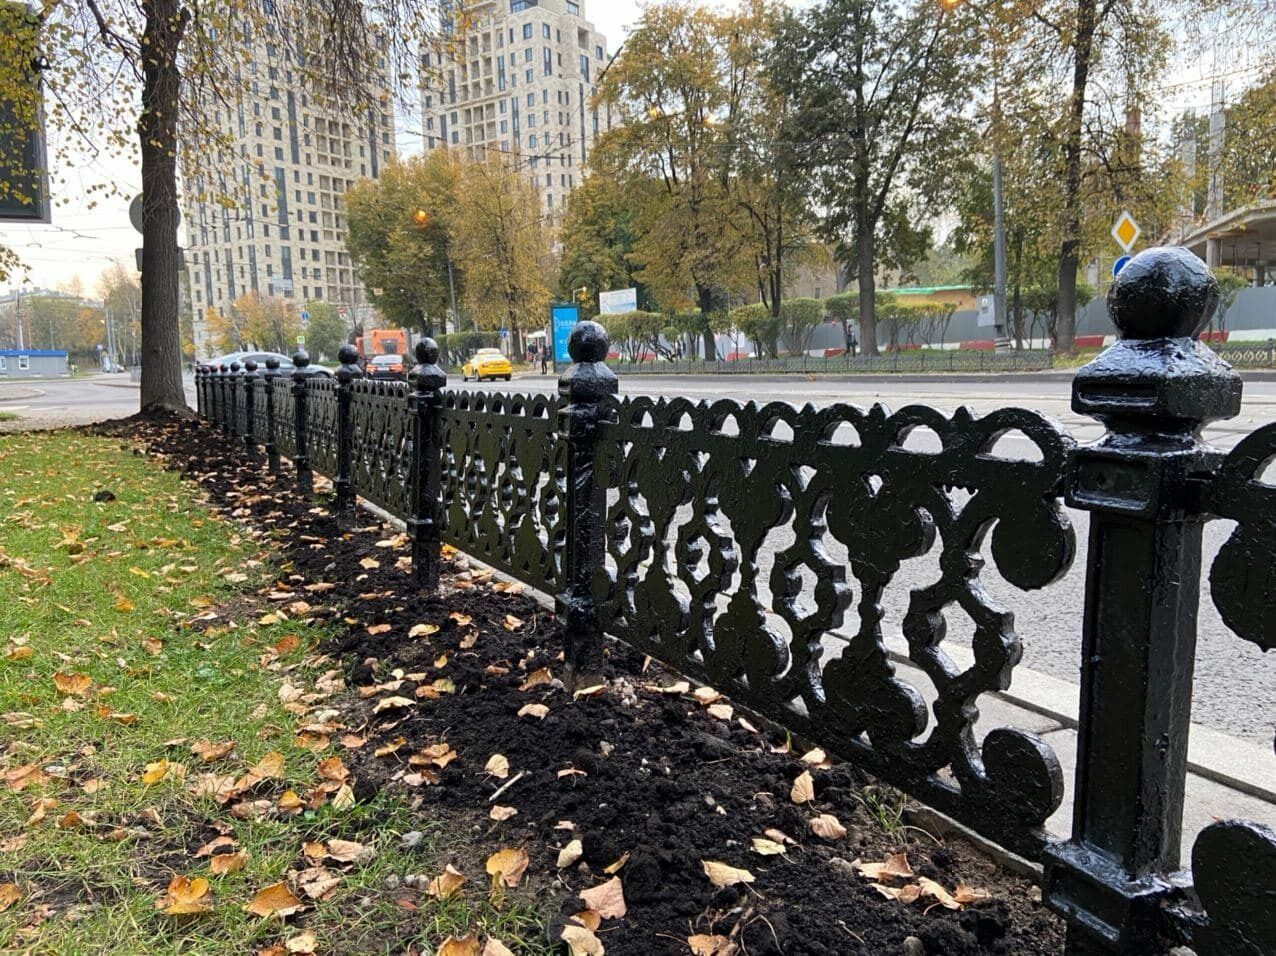 The whole world against Zhilischnik: how Muscovites returned the fence stolen on Shabolovka